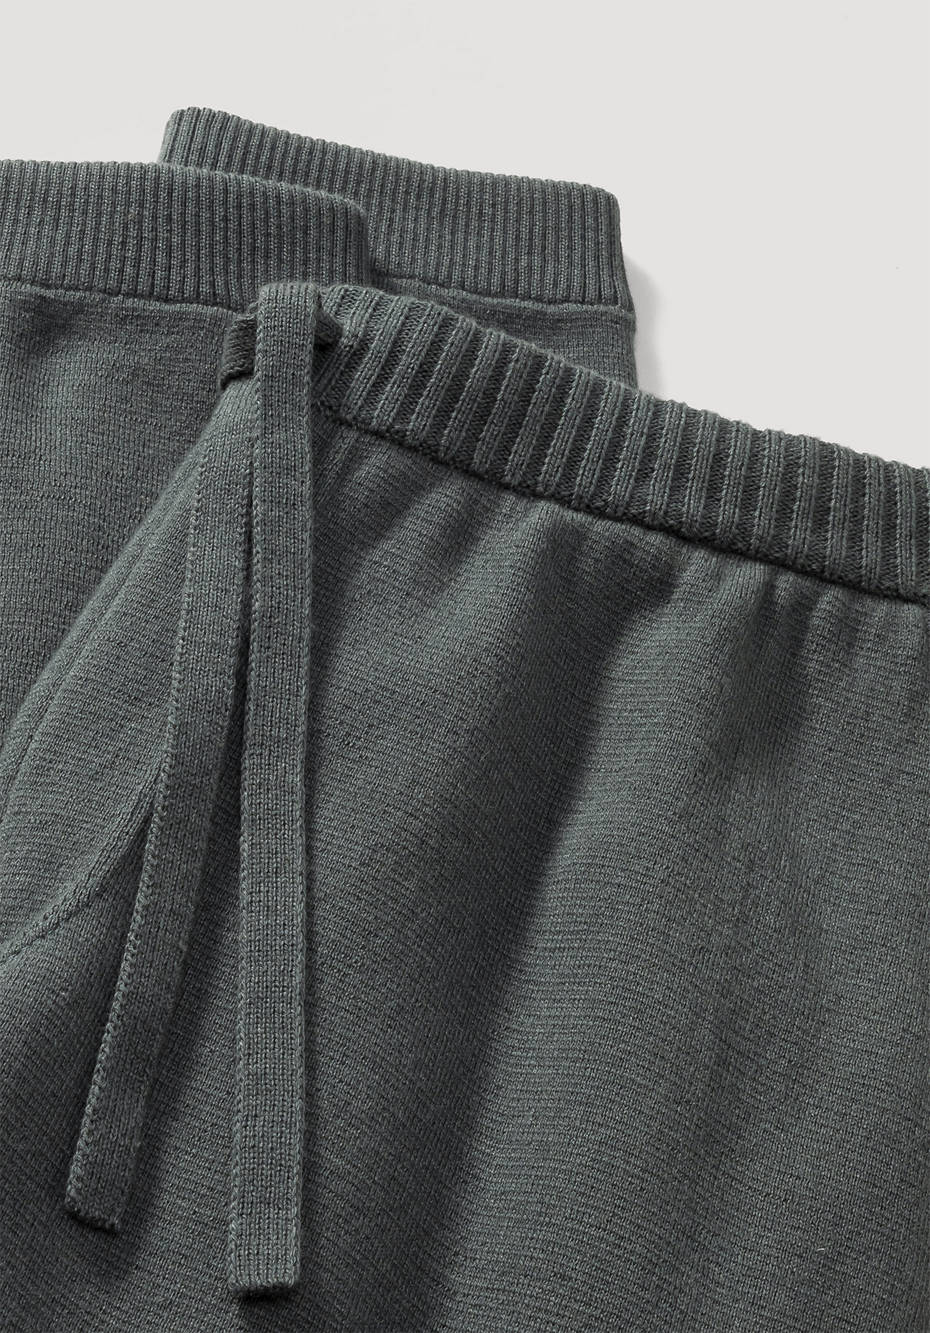 Knit pants made from organic merino wool and organic cotton